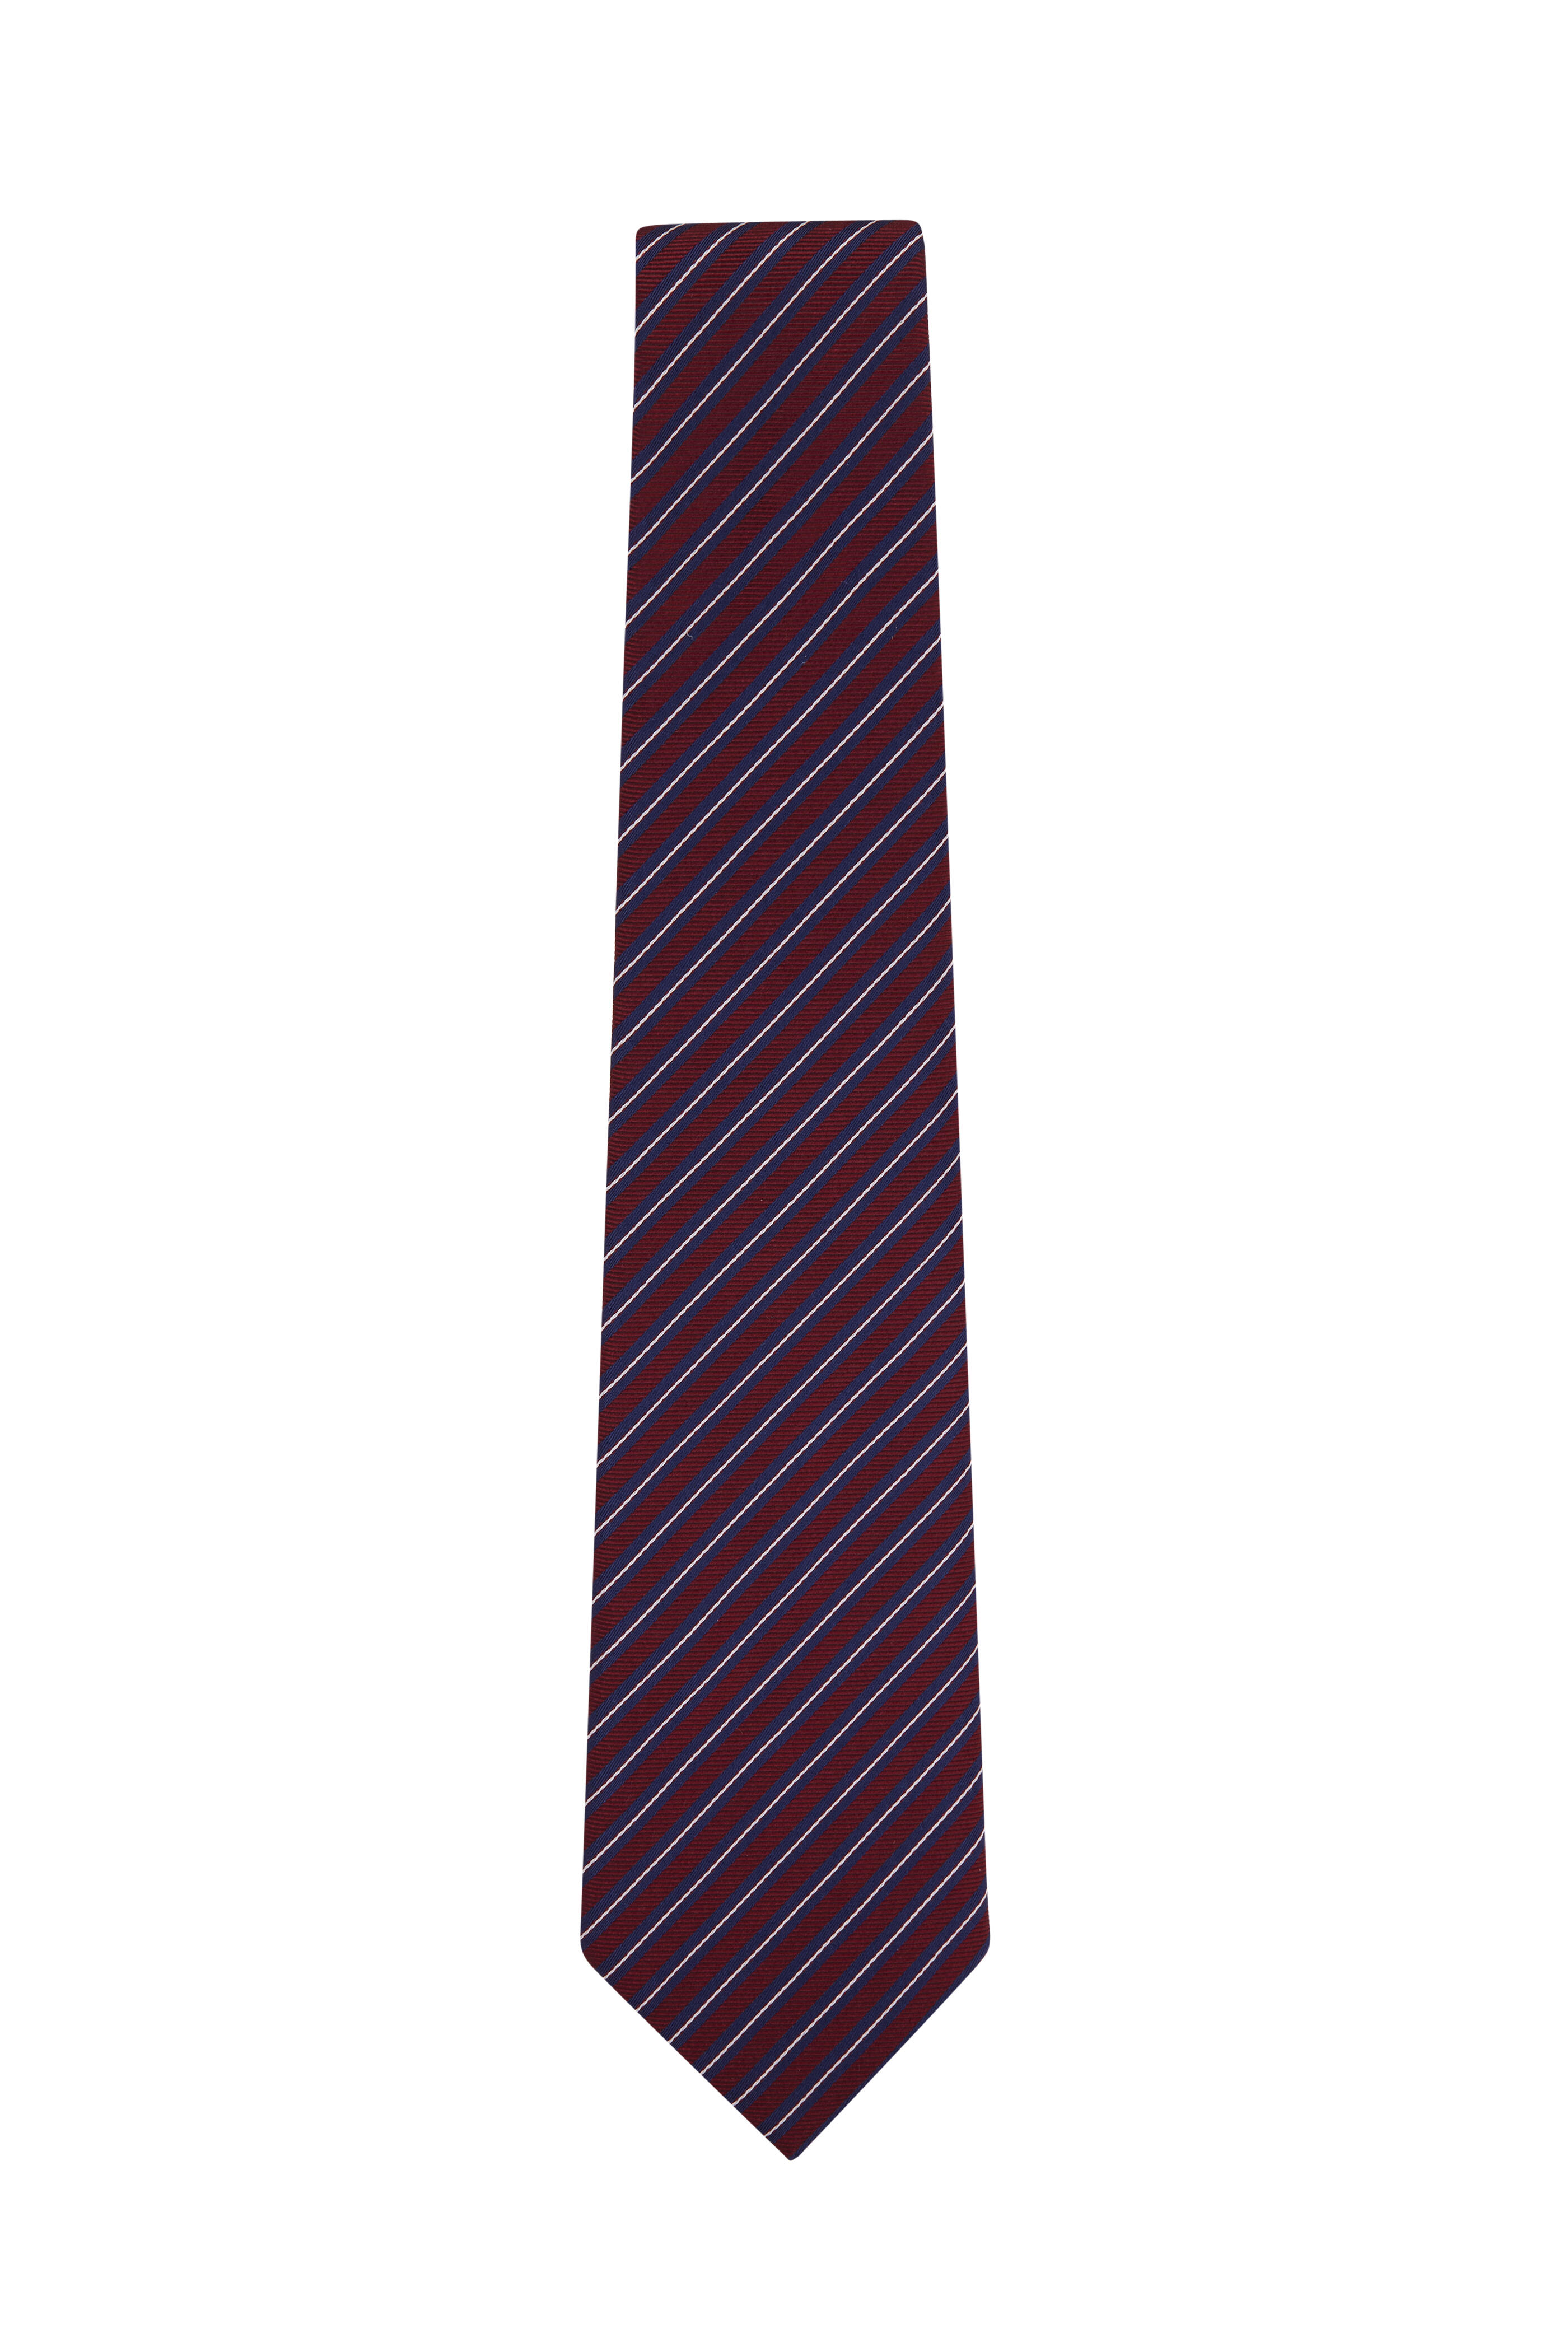 Ermenegildo Zegna Red Silk Tie Made in Italy 